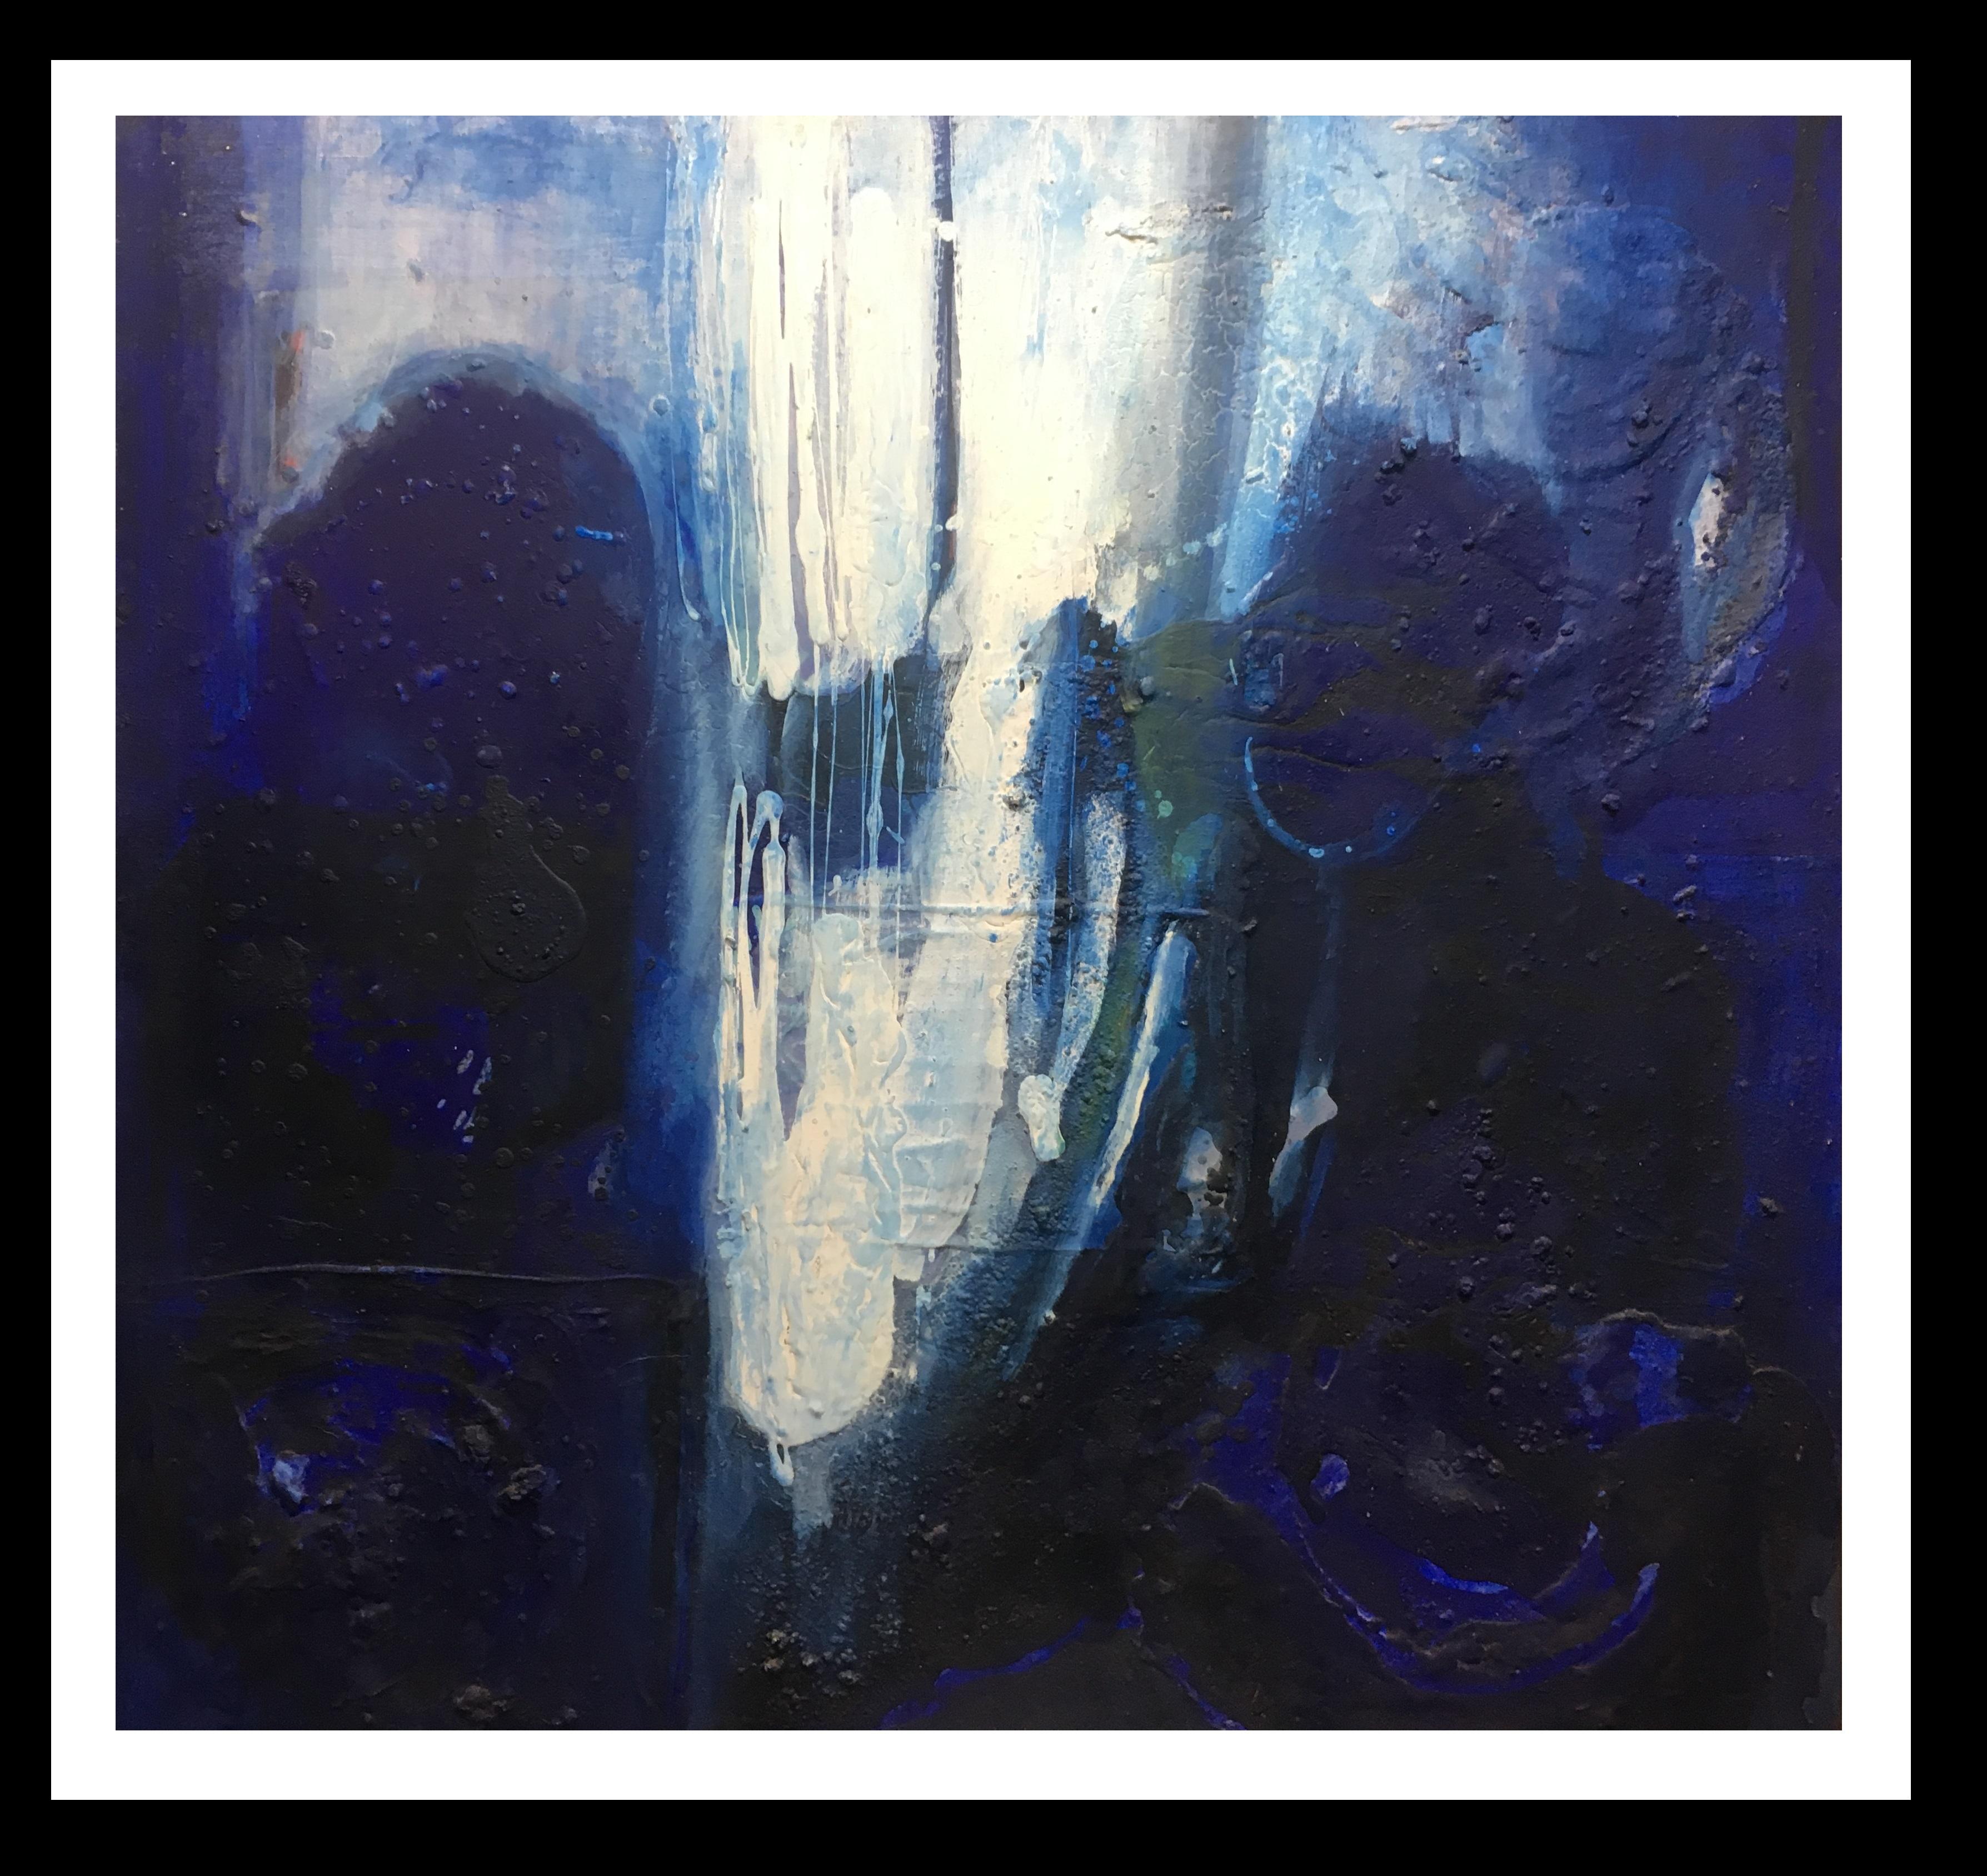 Abstract Painting Maria Asuncion Raventos - RAVENTOS  Mer bleue  Peinture abstraite originale en techniques mixtes